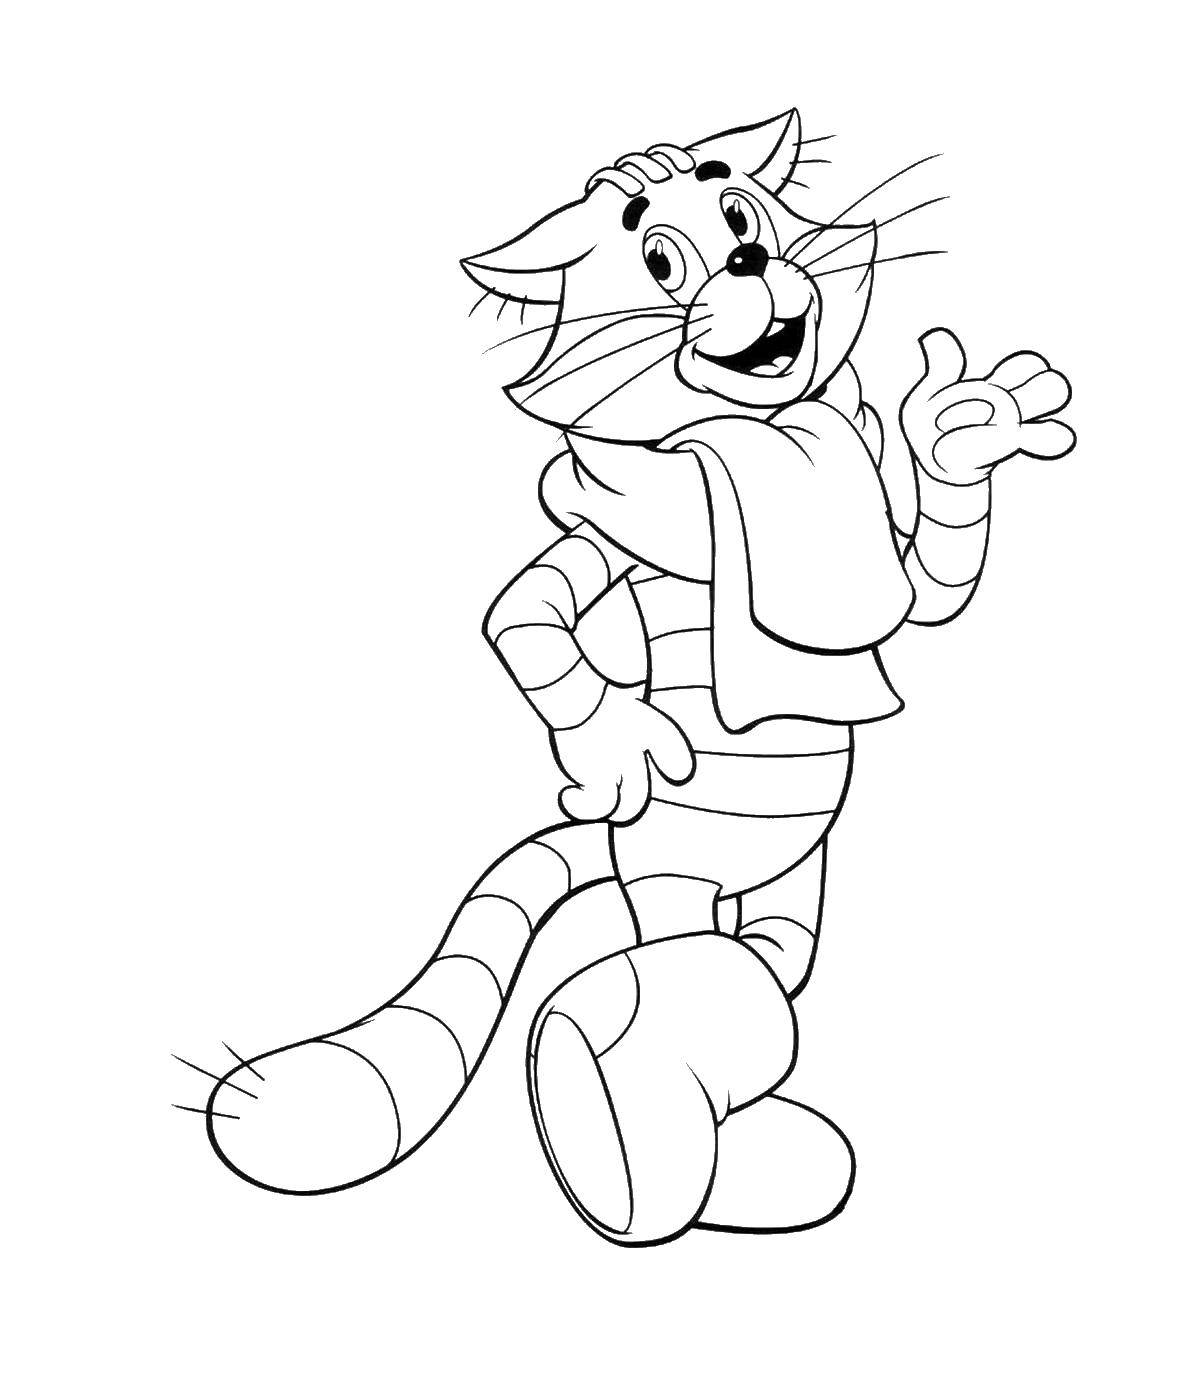 Название: Раскраска Кот матроскин с шарфом. Категория: раскраски простоквашино. Теги: кот Матроскин, шарф.